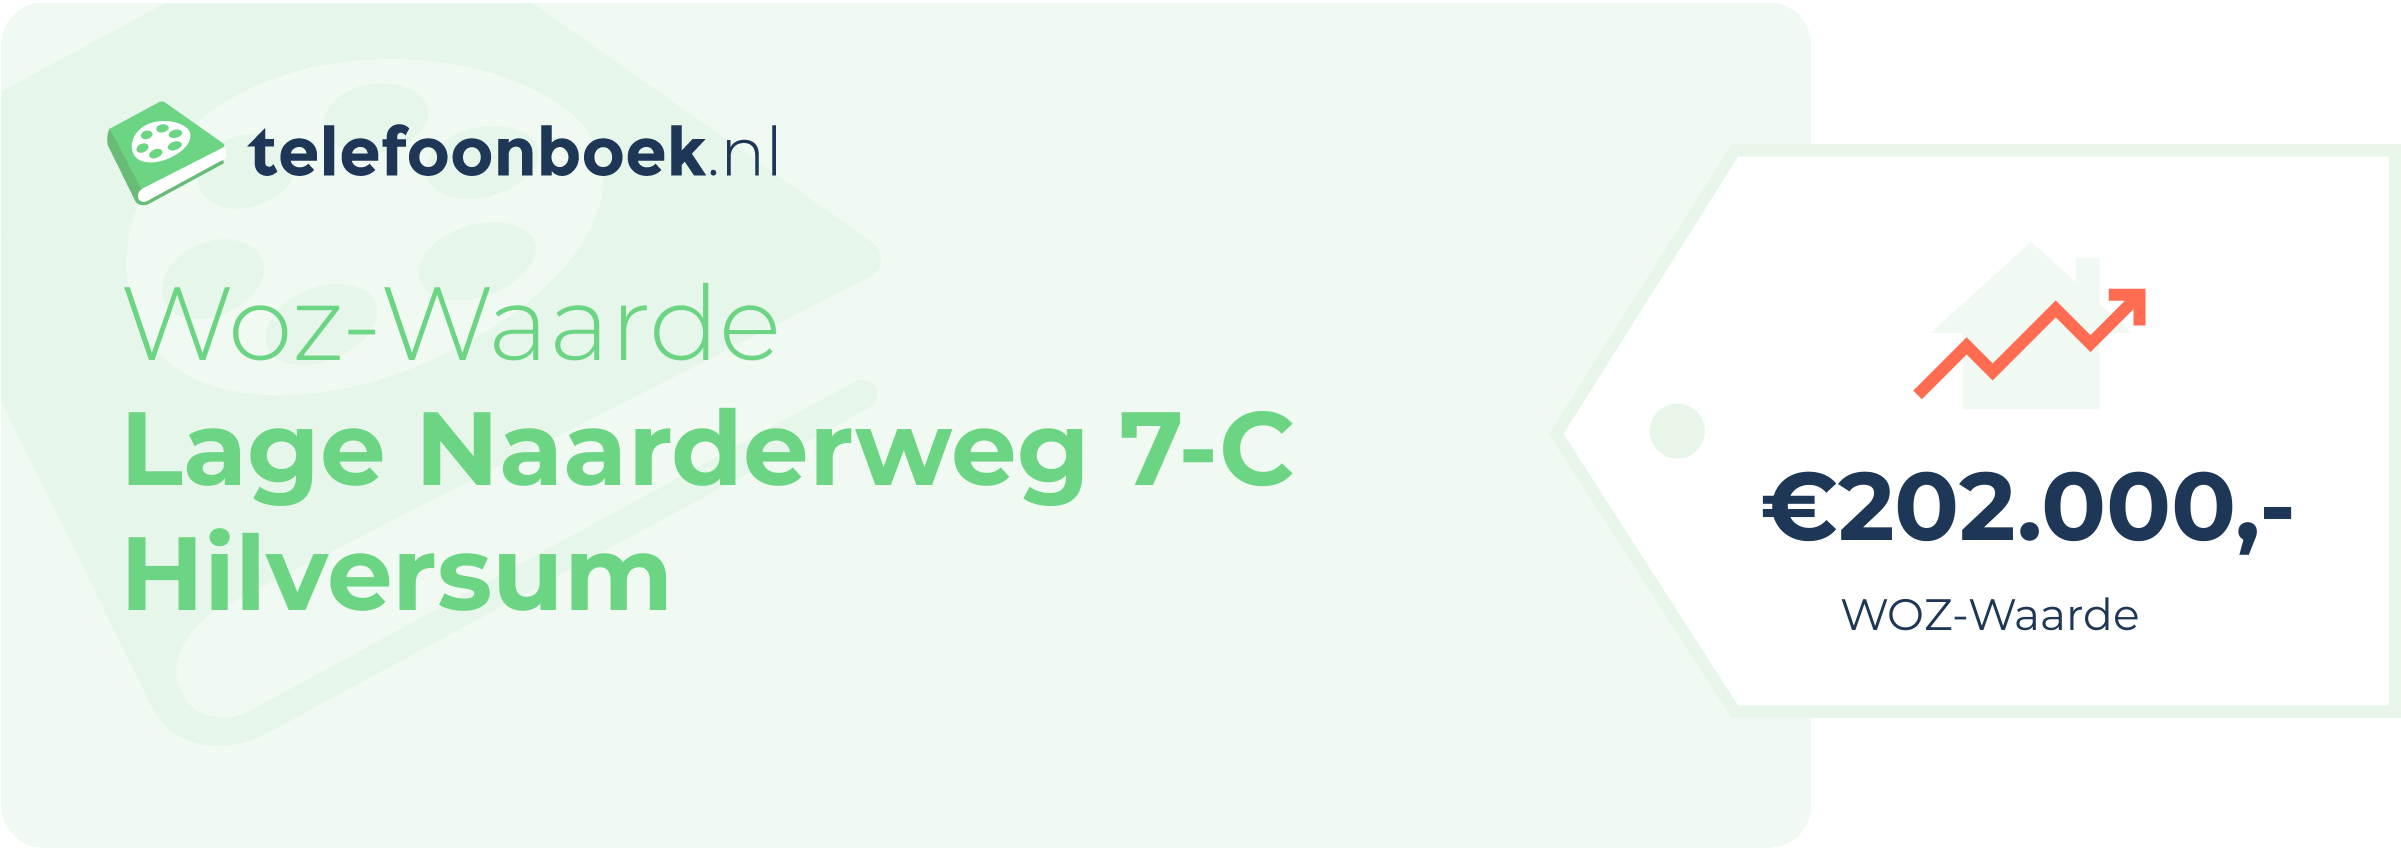 WOZ-waarde Lage Naarderweg 7-C Hilversum